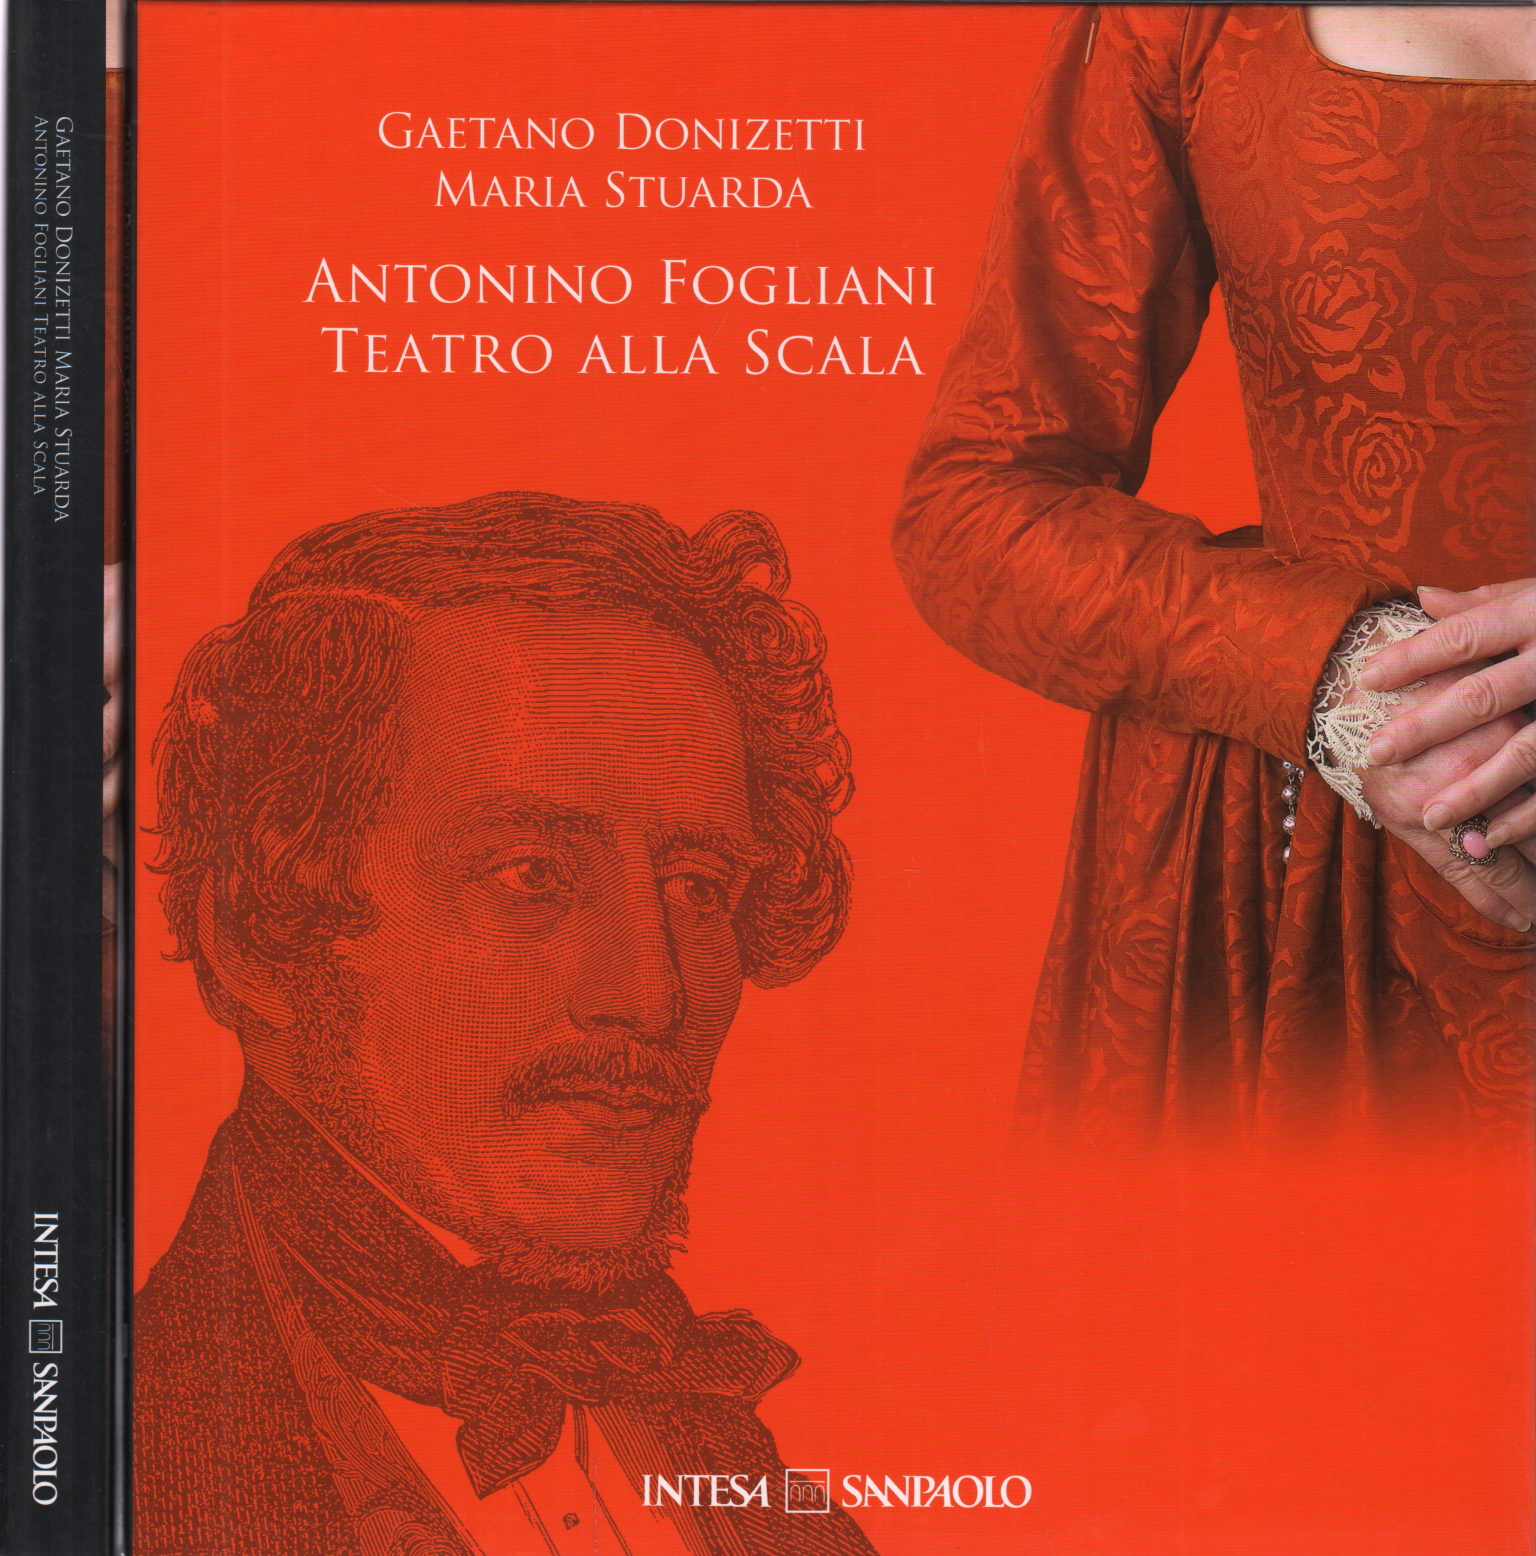 Gaetano Donizetti "Maria Stuarda" Antonino de la Feuille, de Gaetano Donizetti